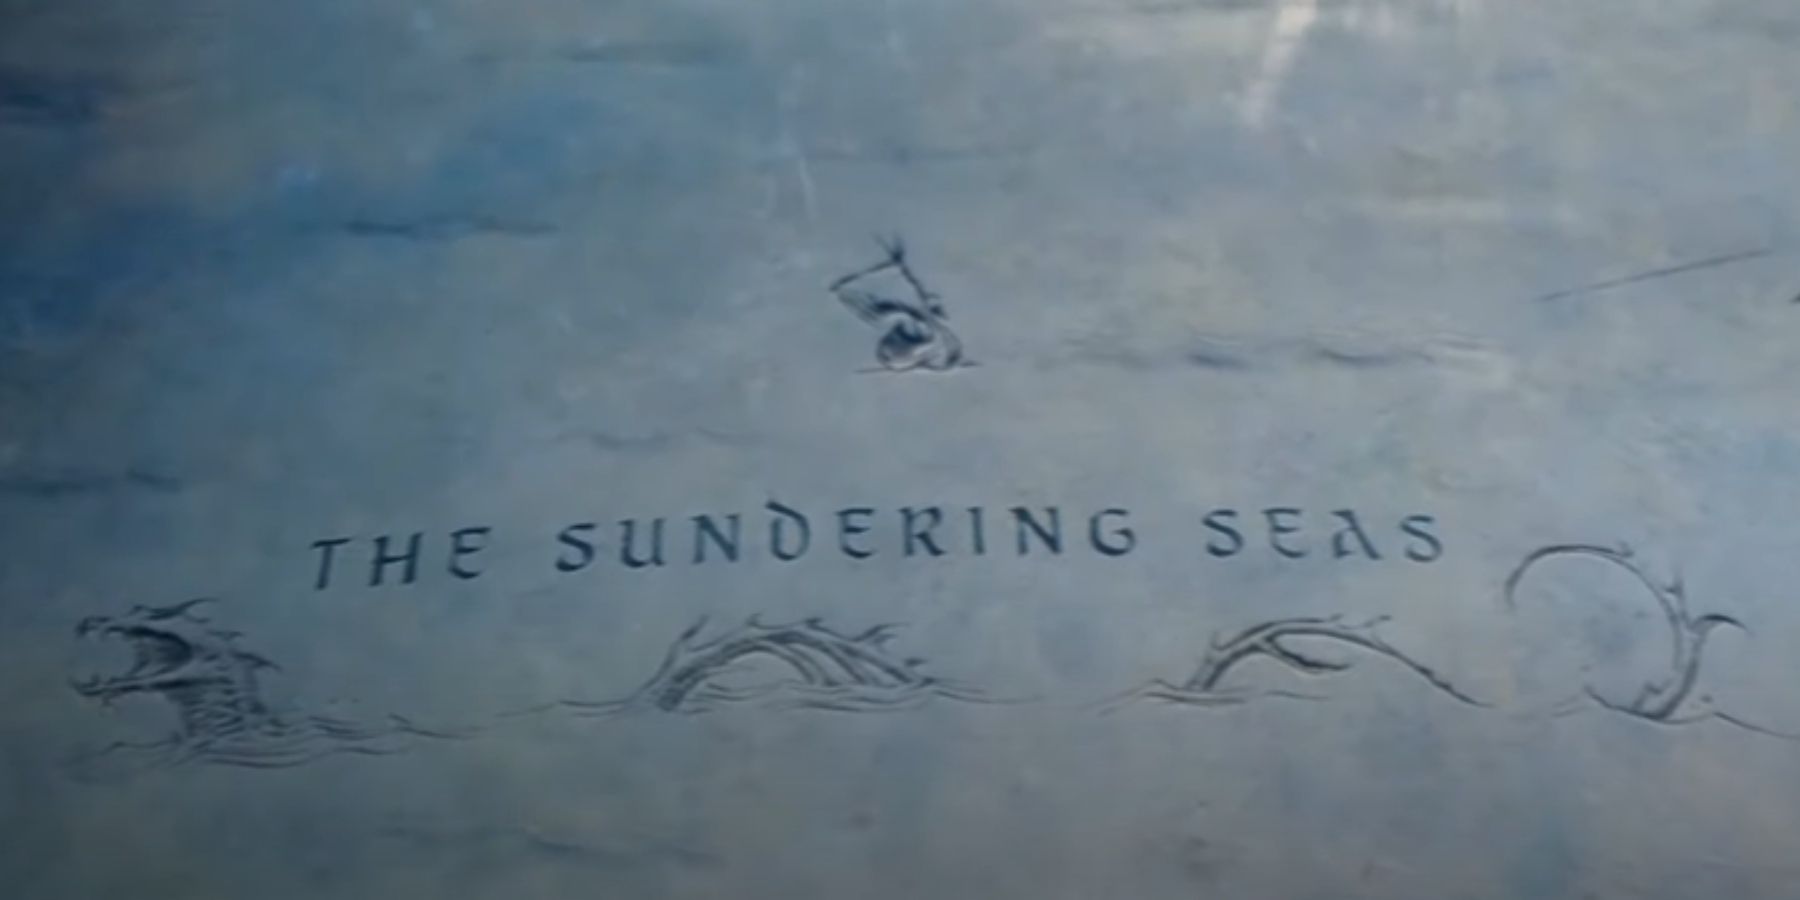 the sundering seas